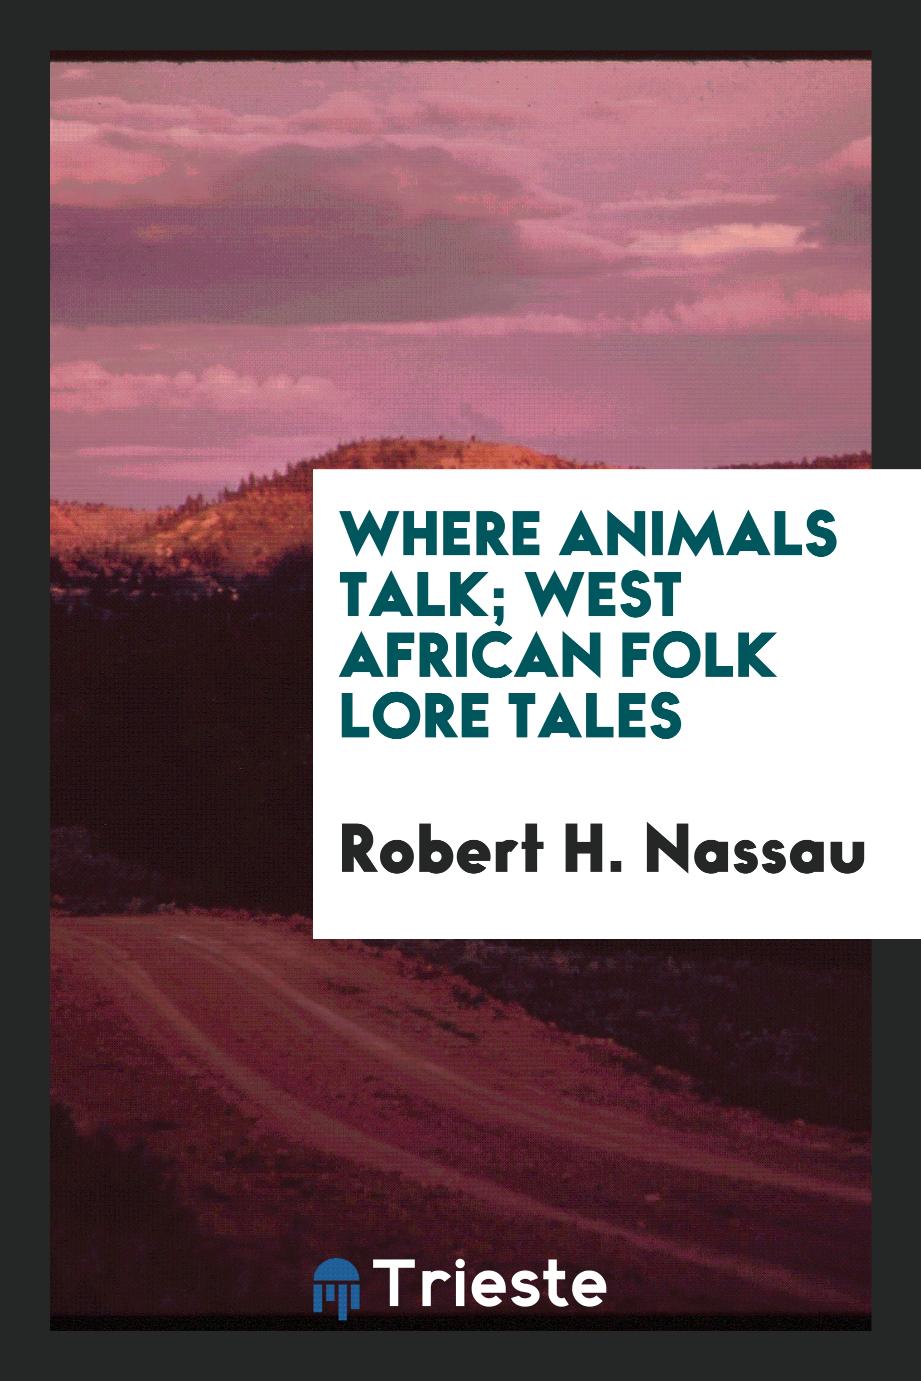 Where animals talk; west African folk lore tales